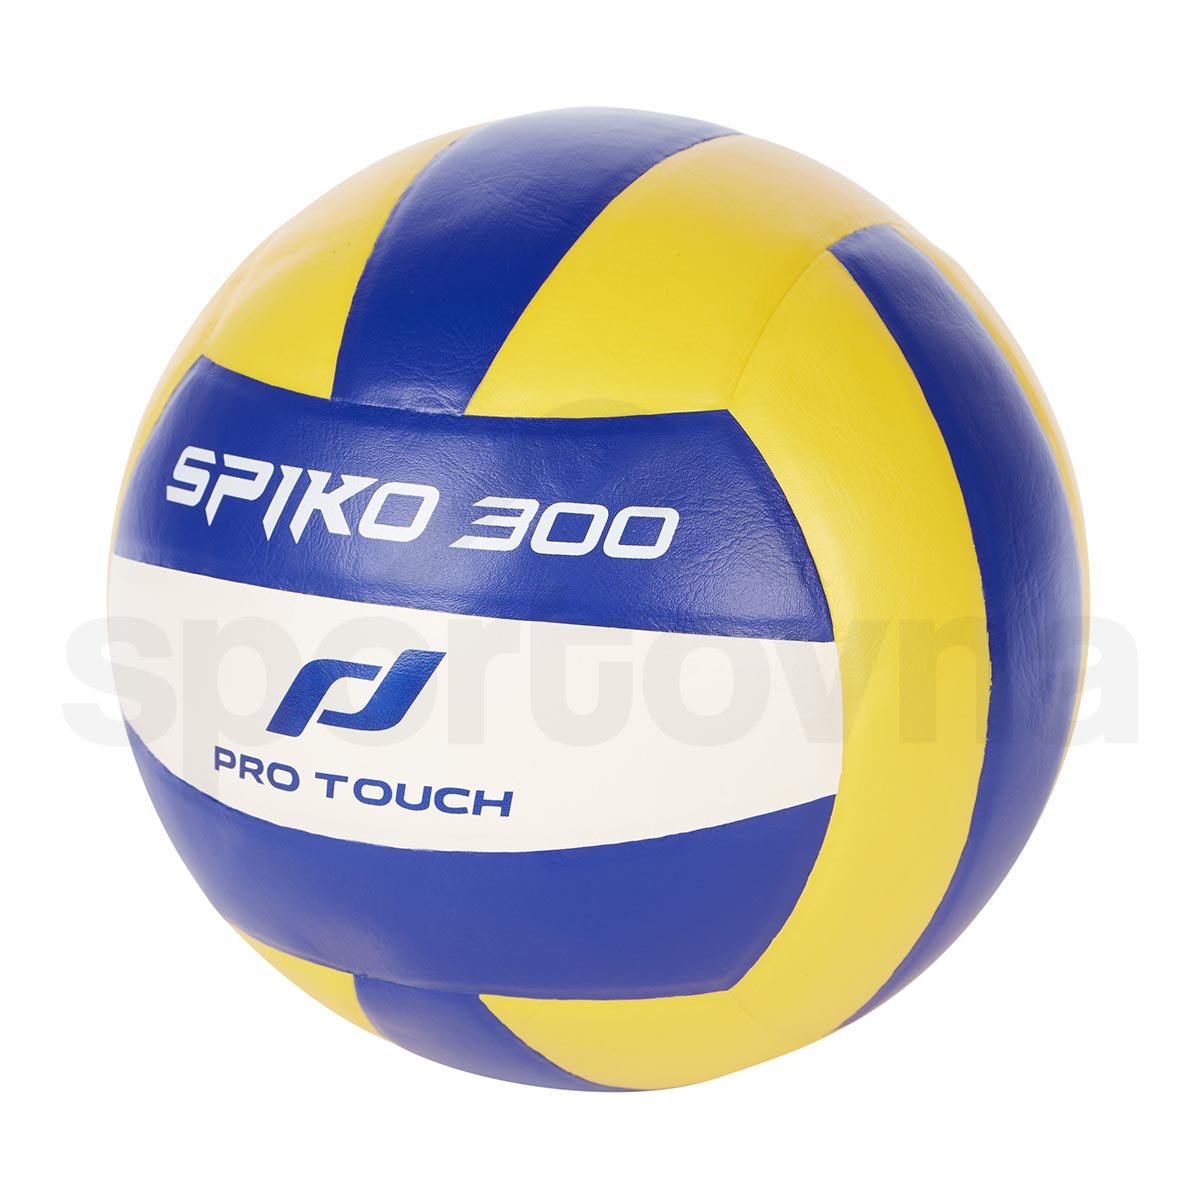 Pro Touch Spiko 300 U 413474-90